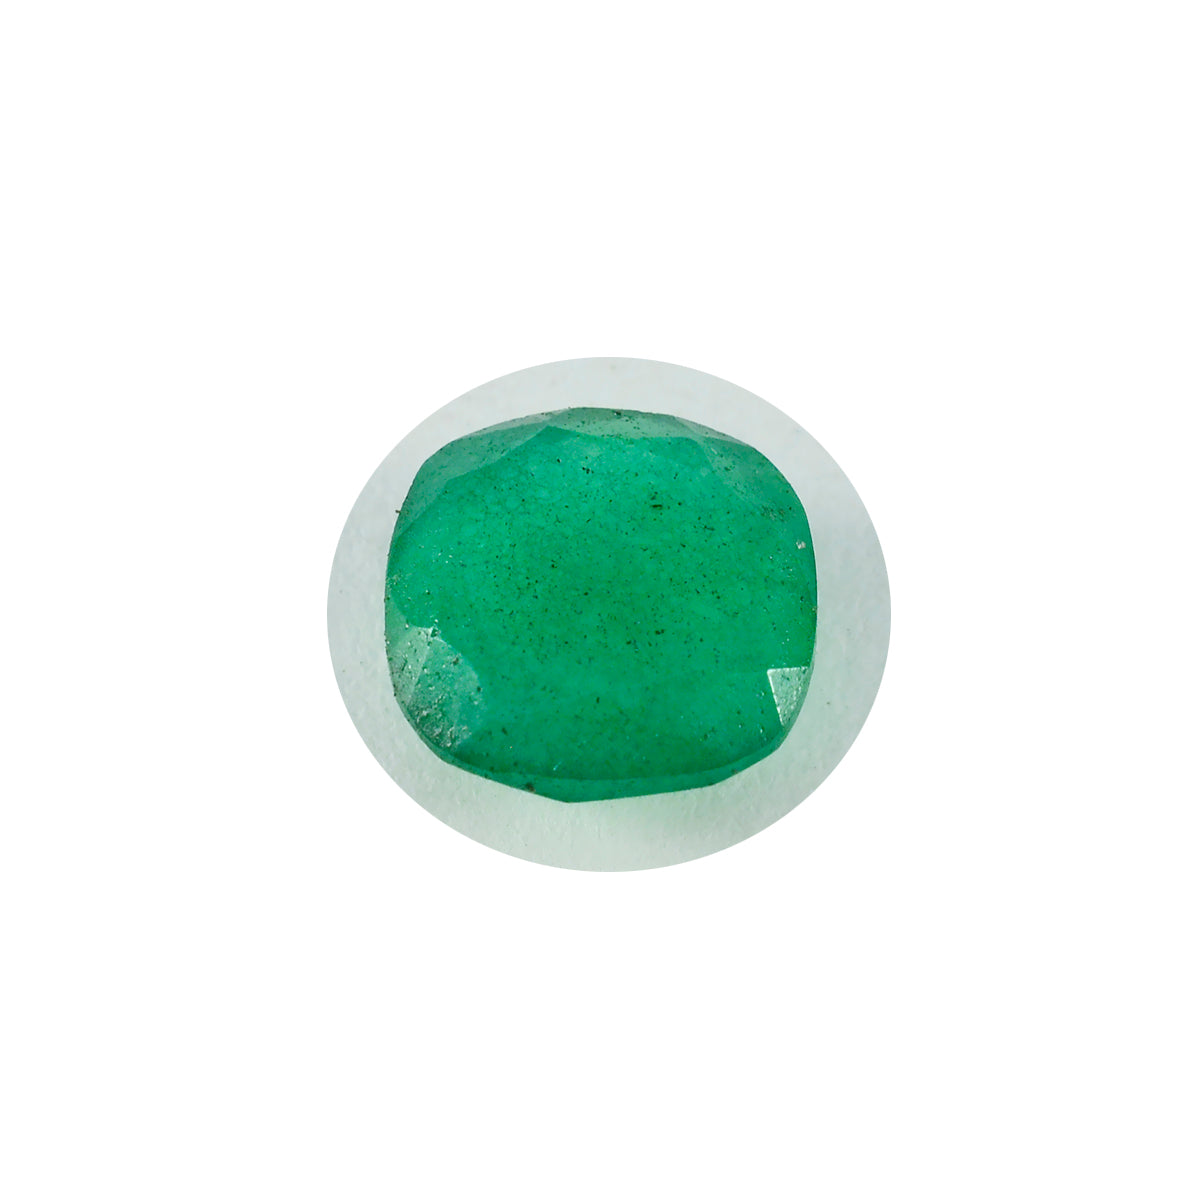 Riyogems 1PC Genuine Green Jasper Faceted 13x13 mm Cushion Shape excellent Quality Loose Stone